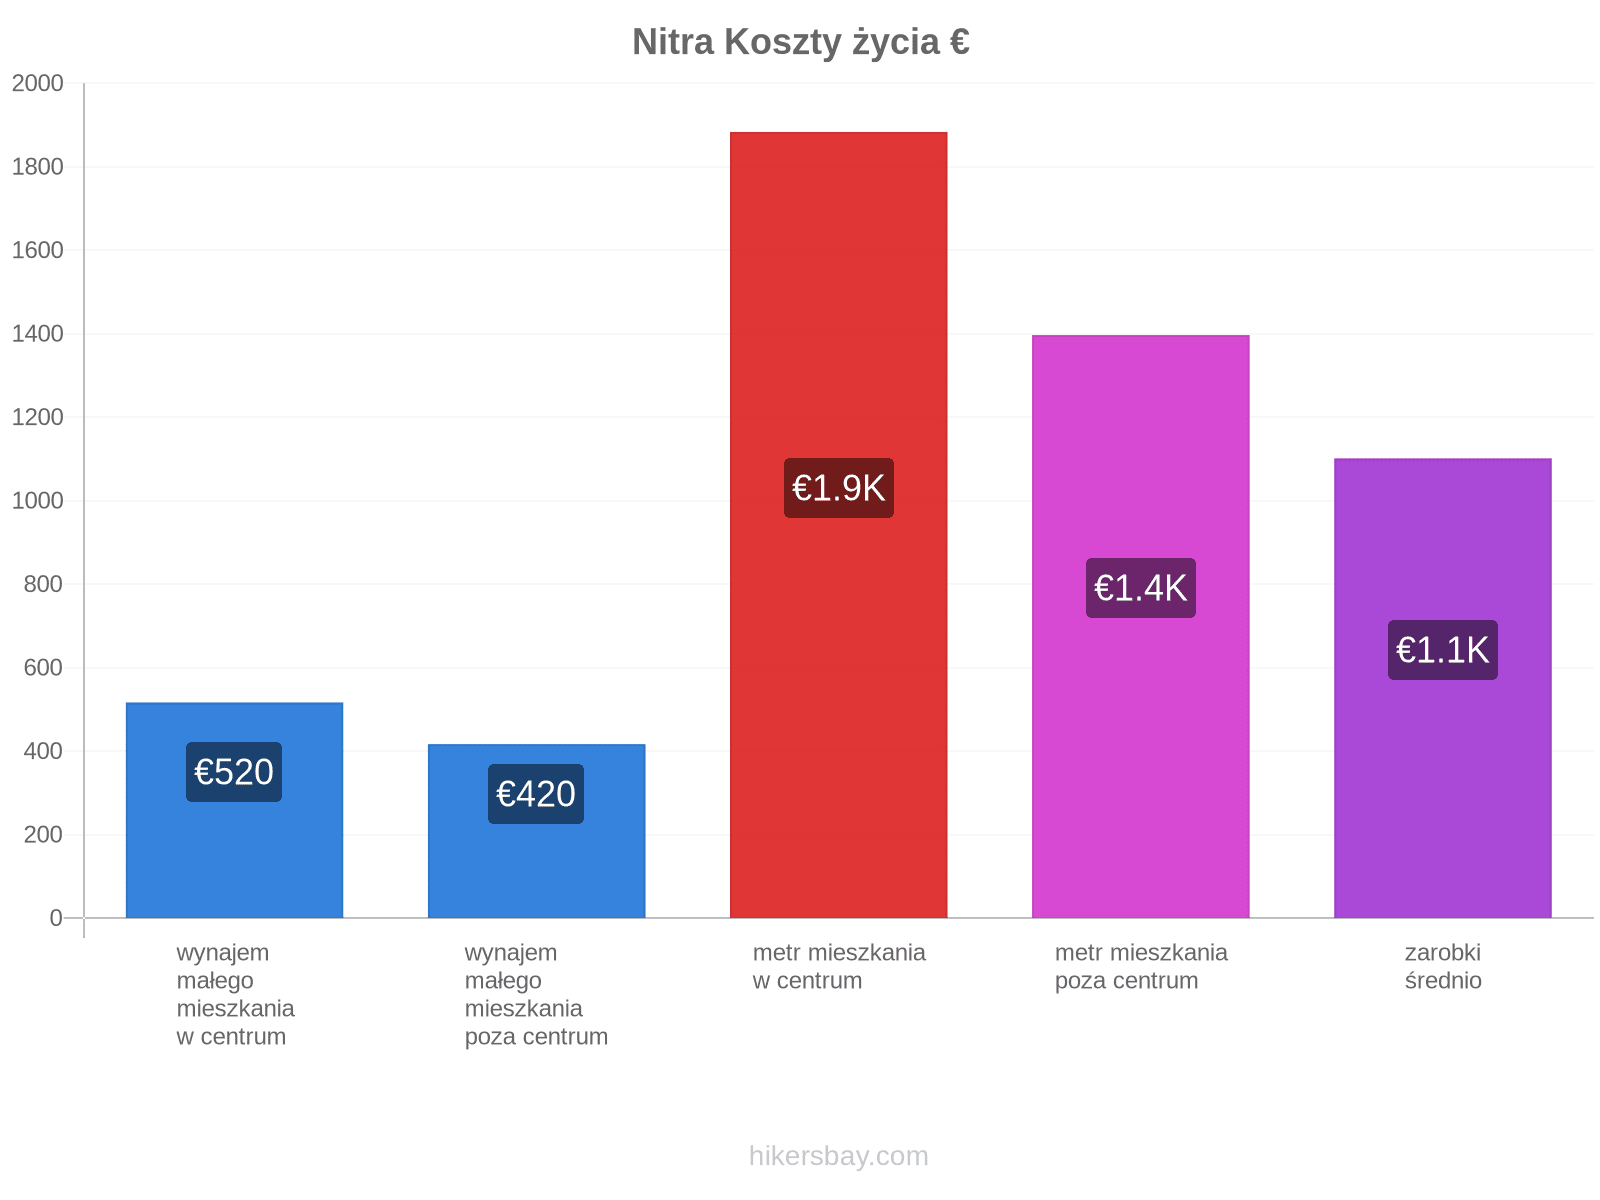 Nitra koszty życia hikersbay.com